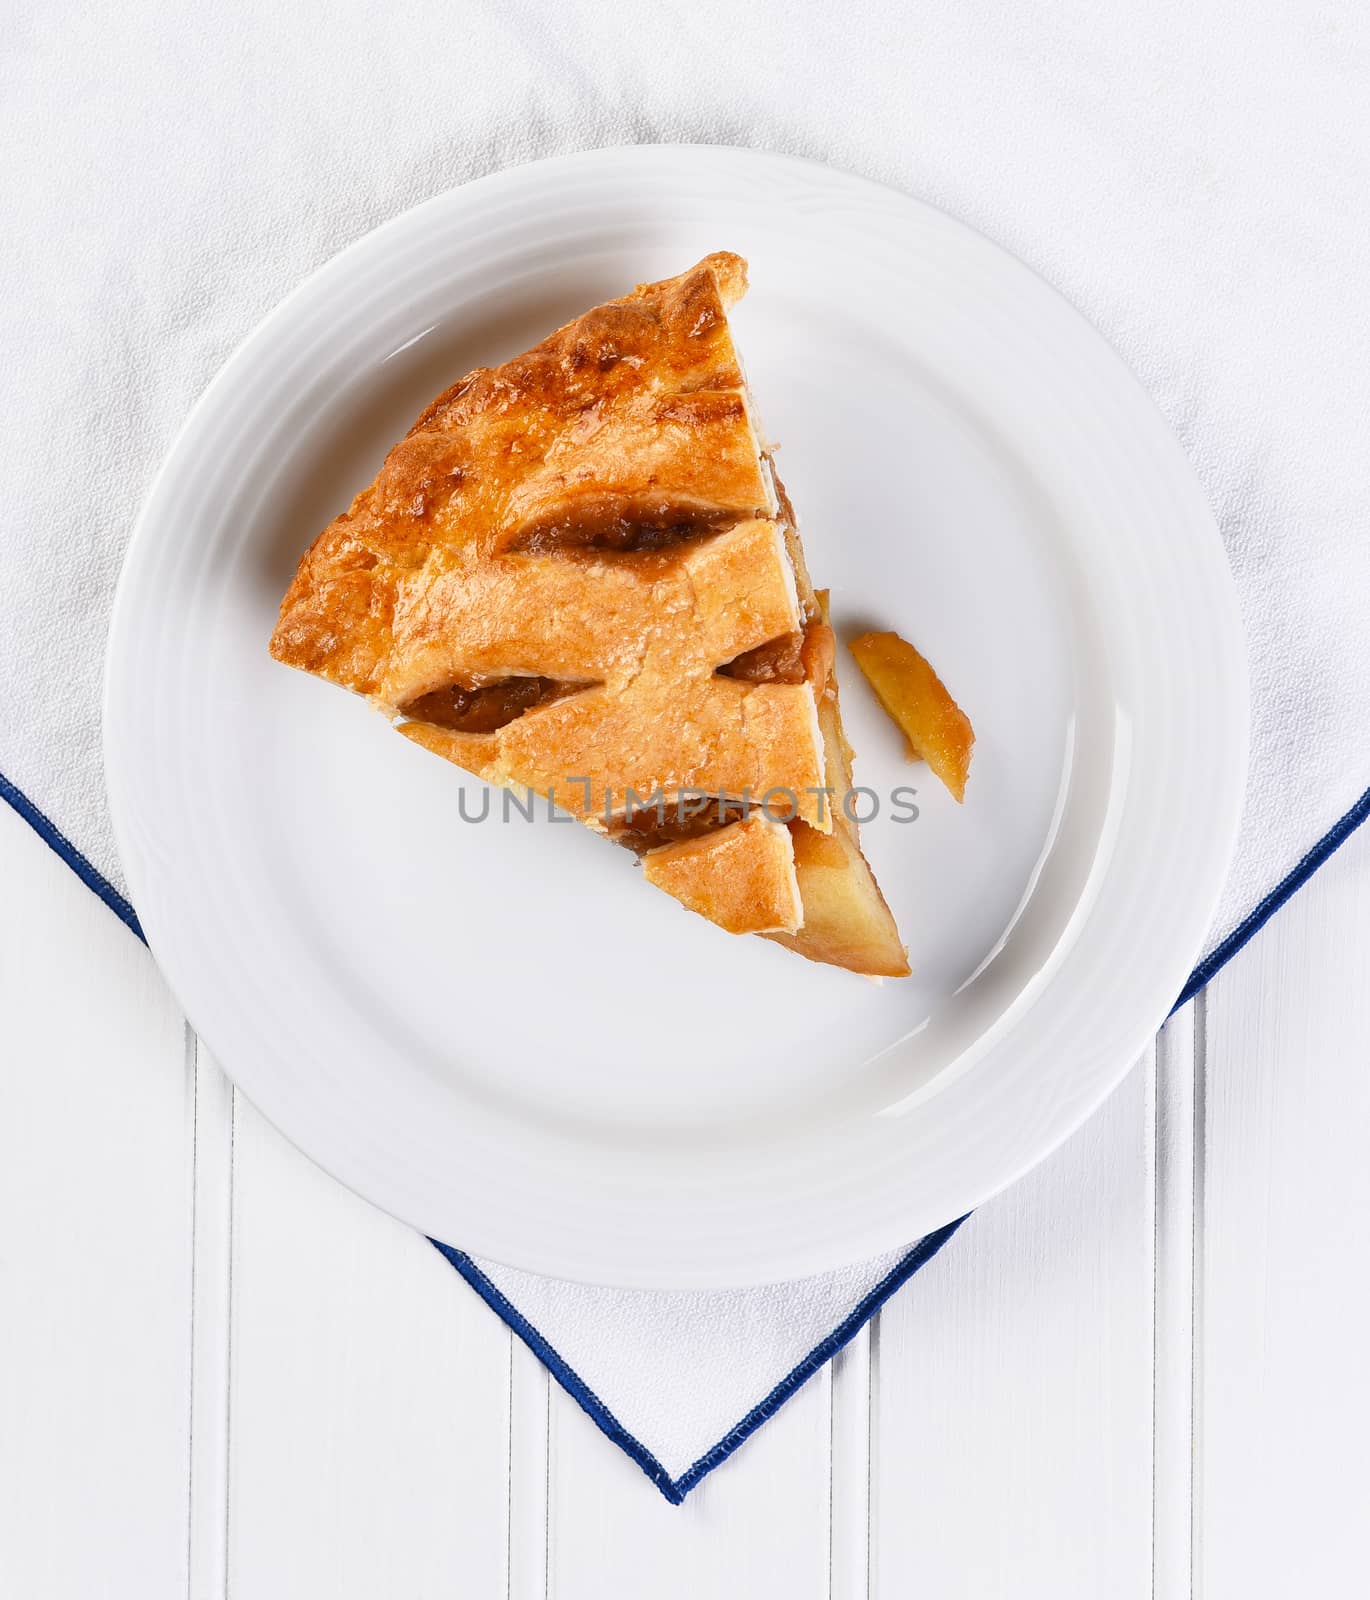 Fresh Baked Apple Pie slice on white plate by sCukrov